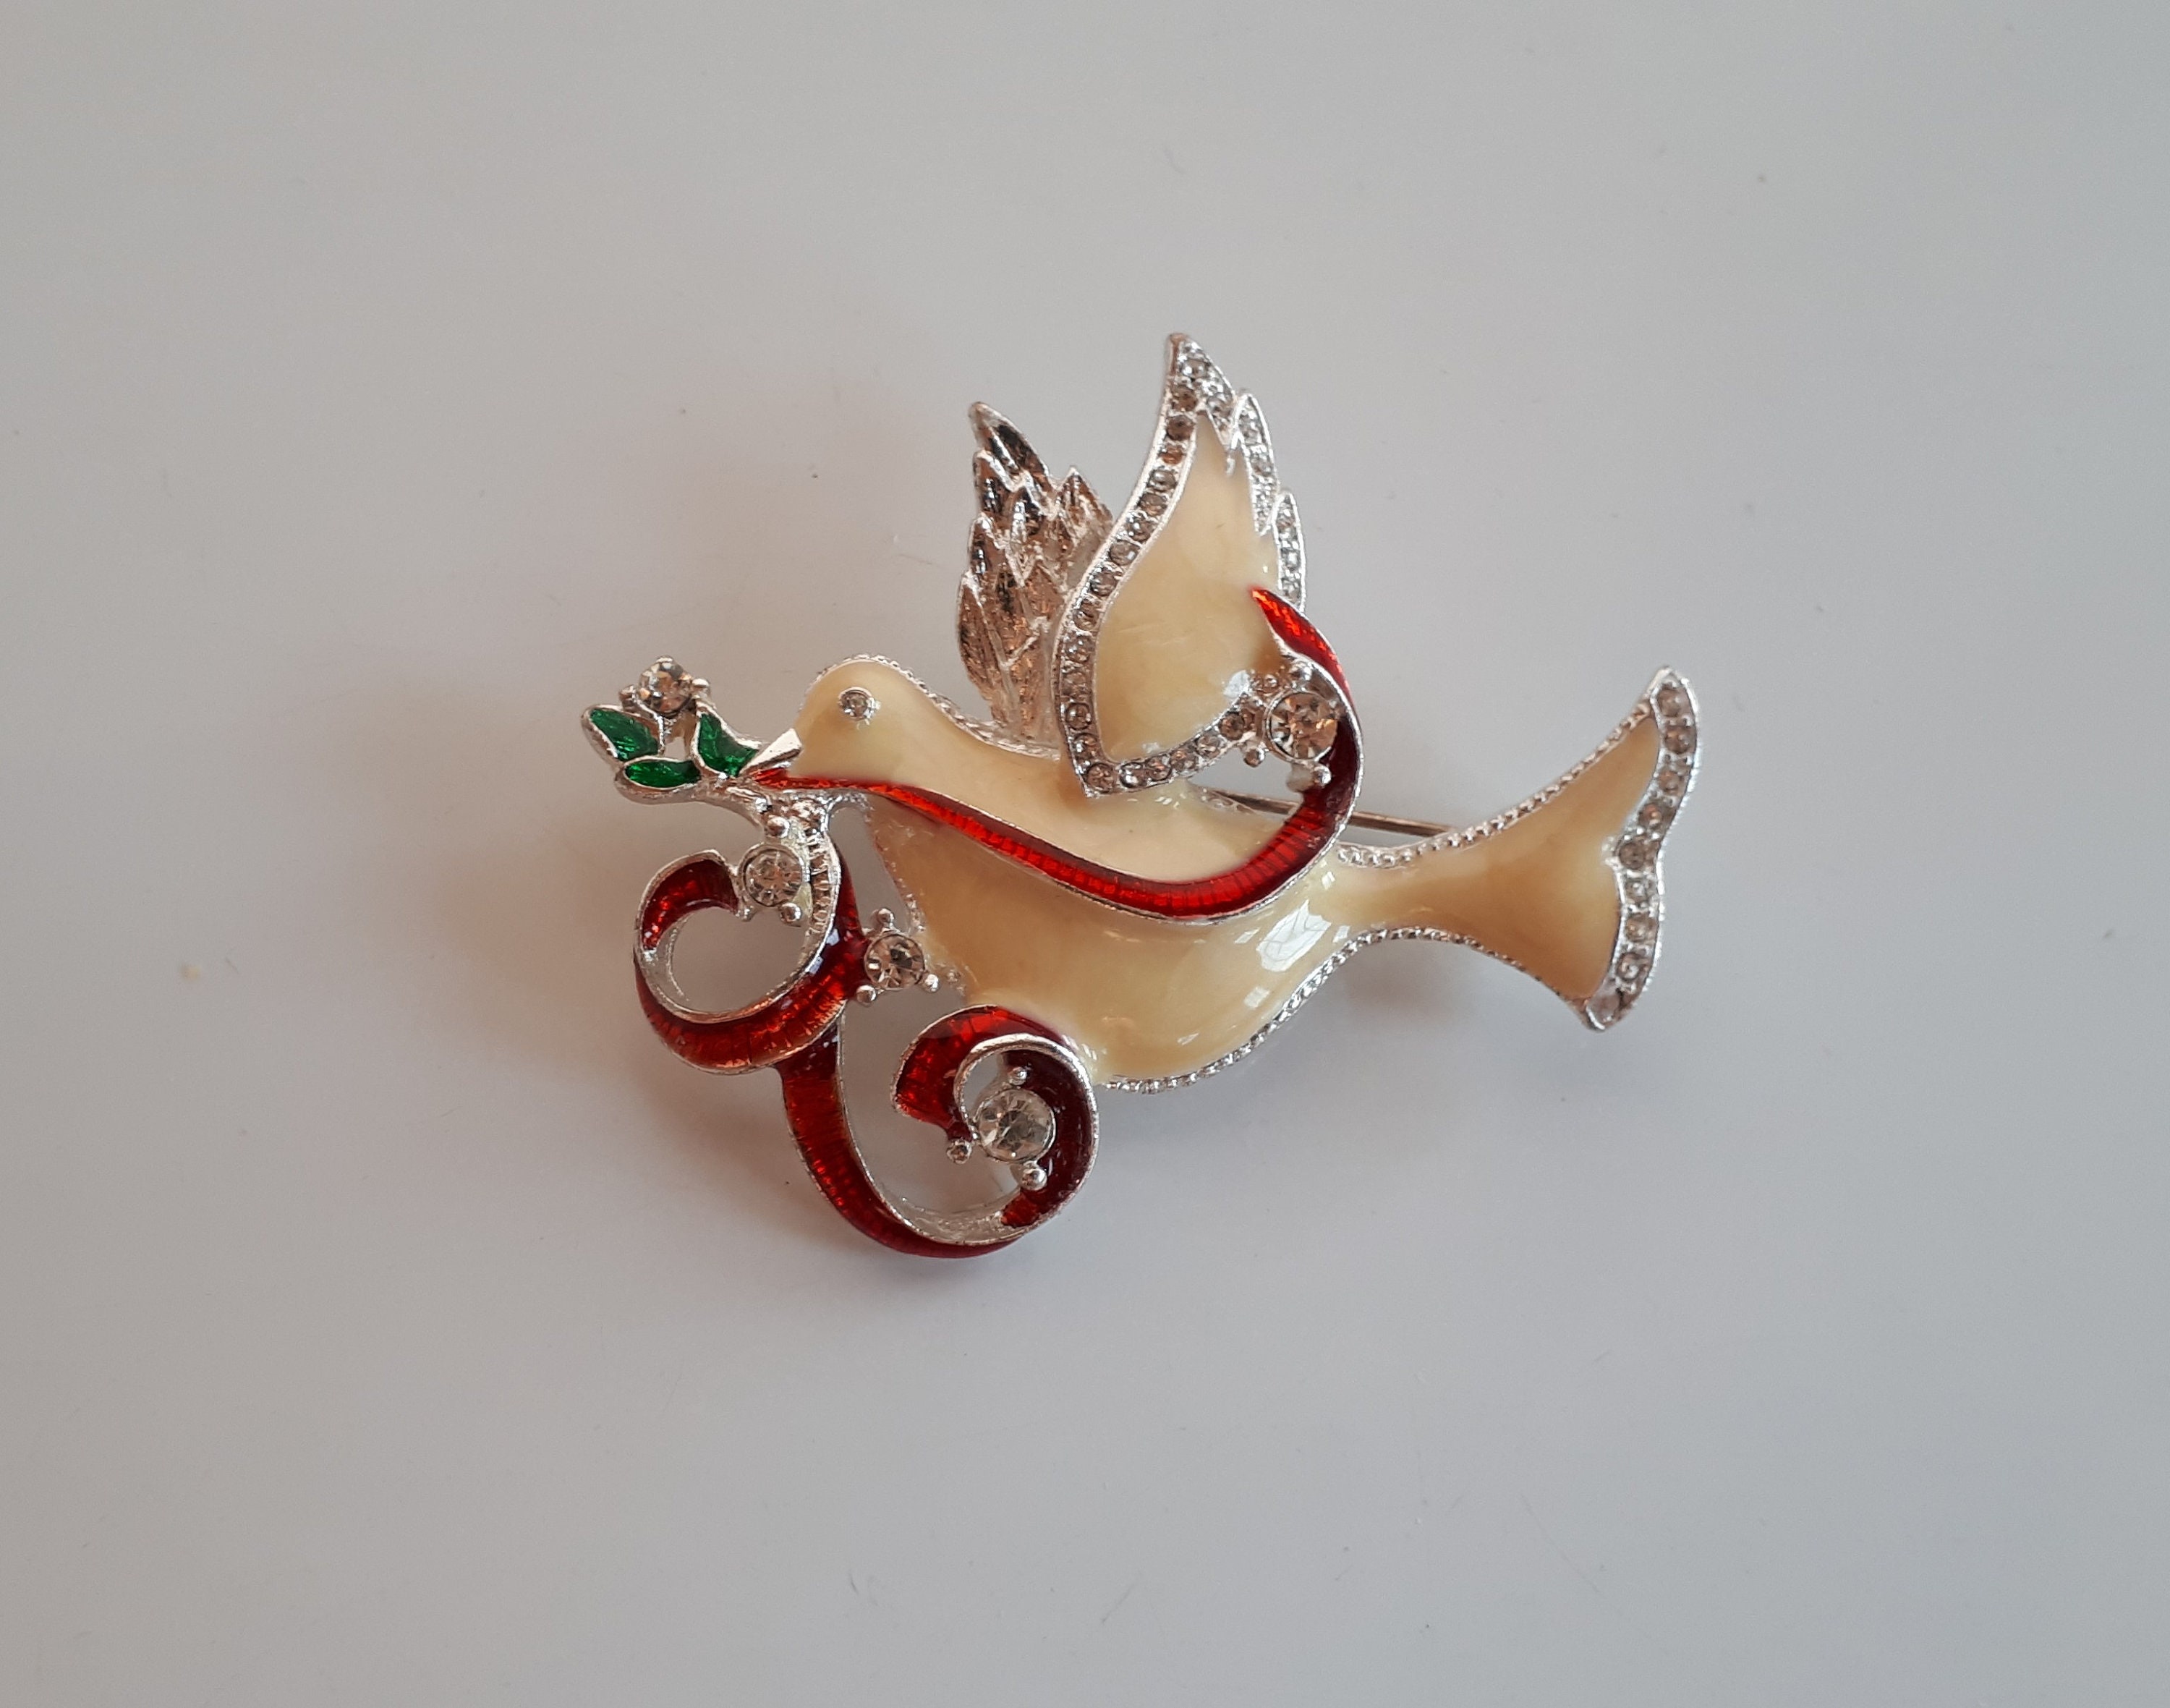 Dove bird earrings white enamel crystal rhinestone vintage style in gift box